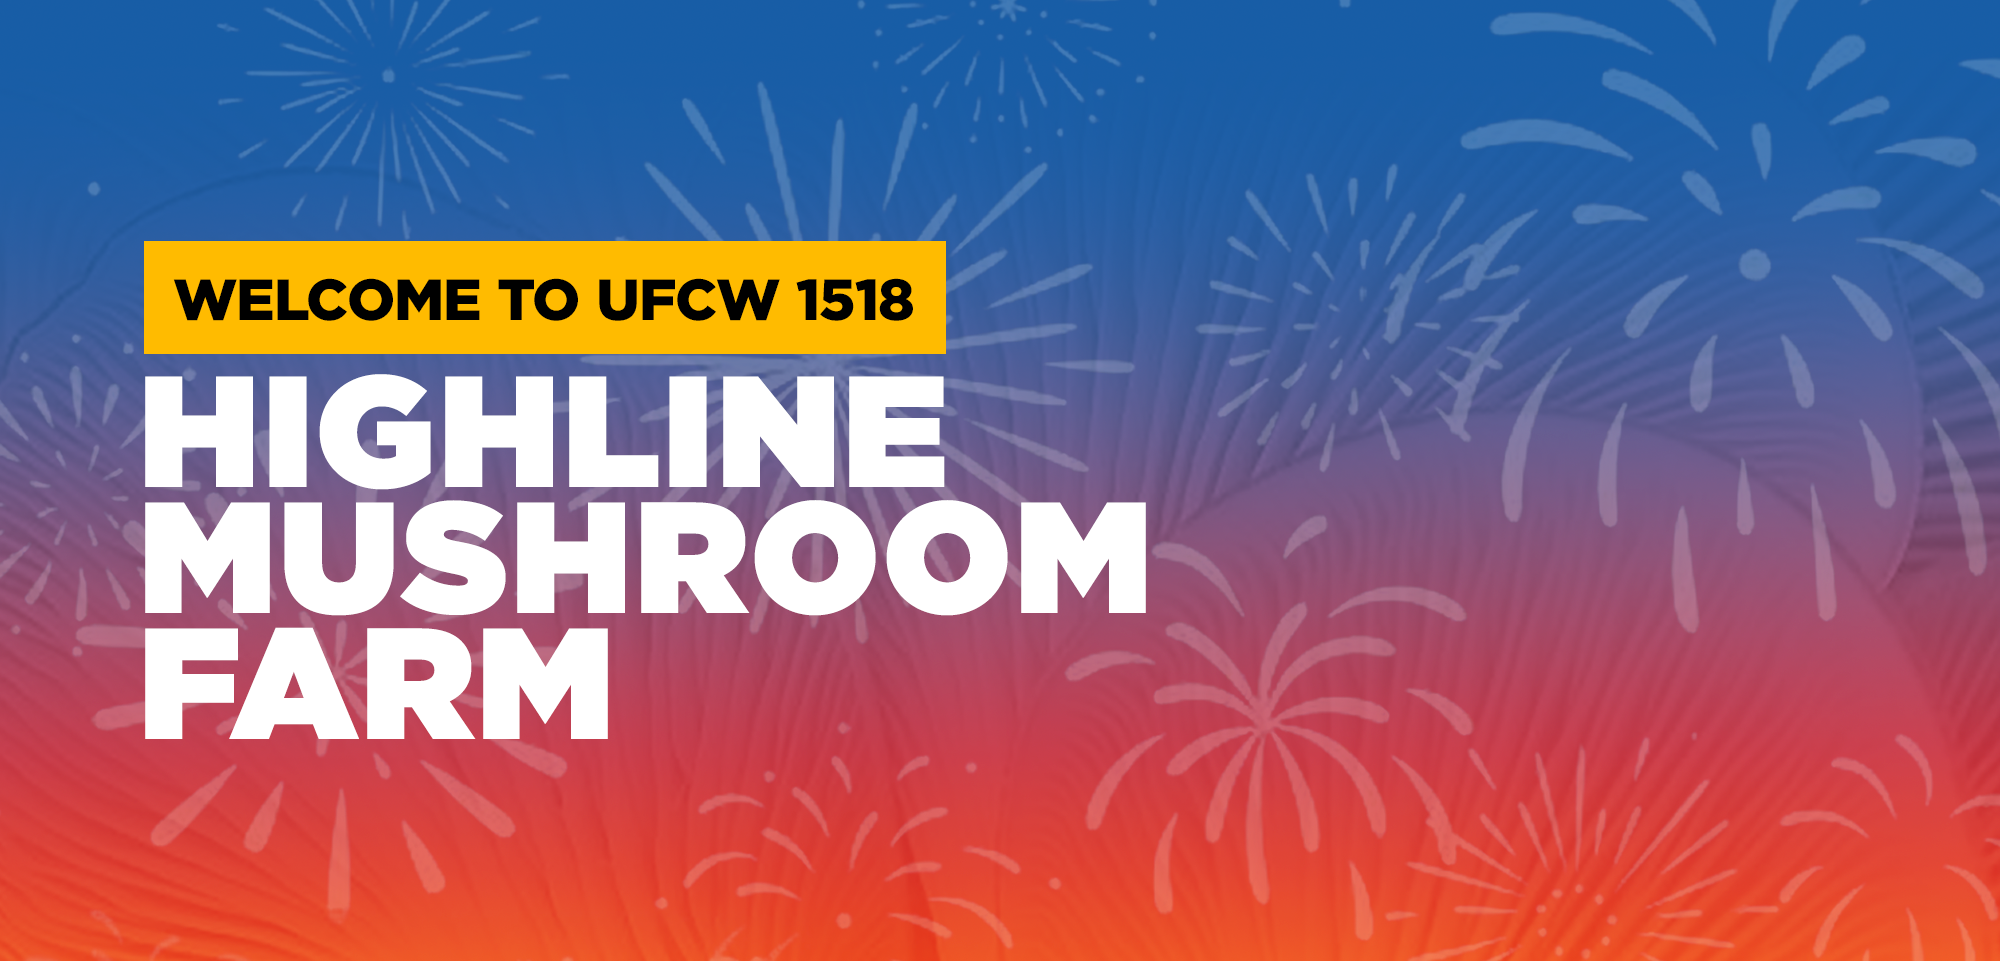 Welcome to UFCW 1518: Highline Mushroom